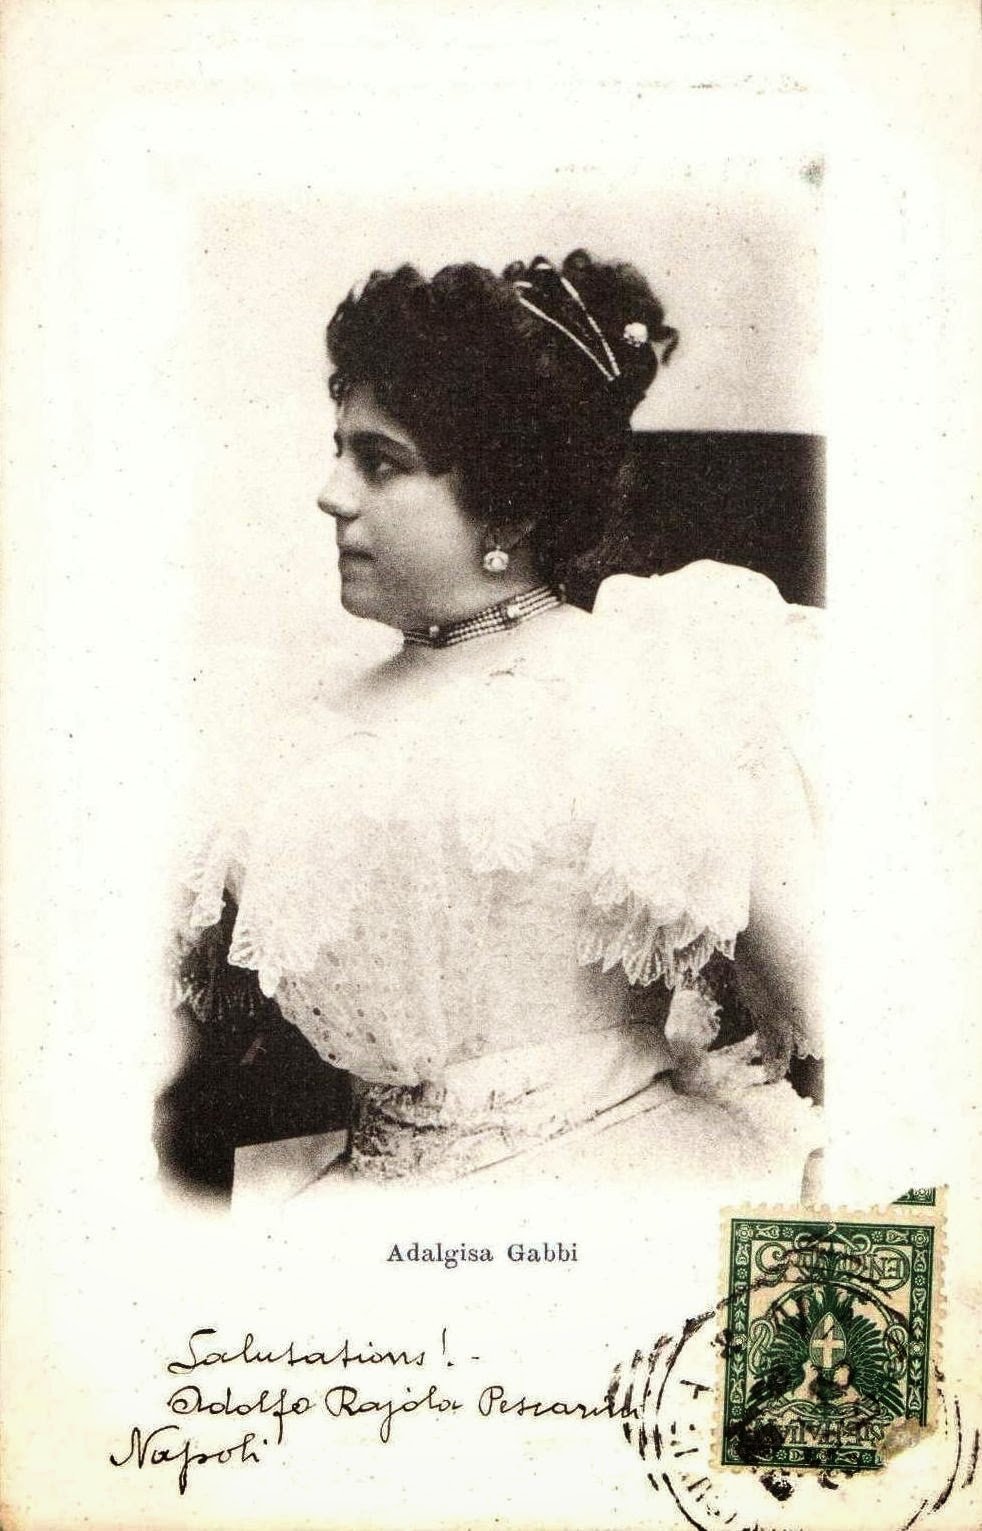 Adalgisa Giana (1907-09-10 – 2015-05-16). Operatic sopranos